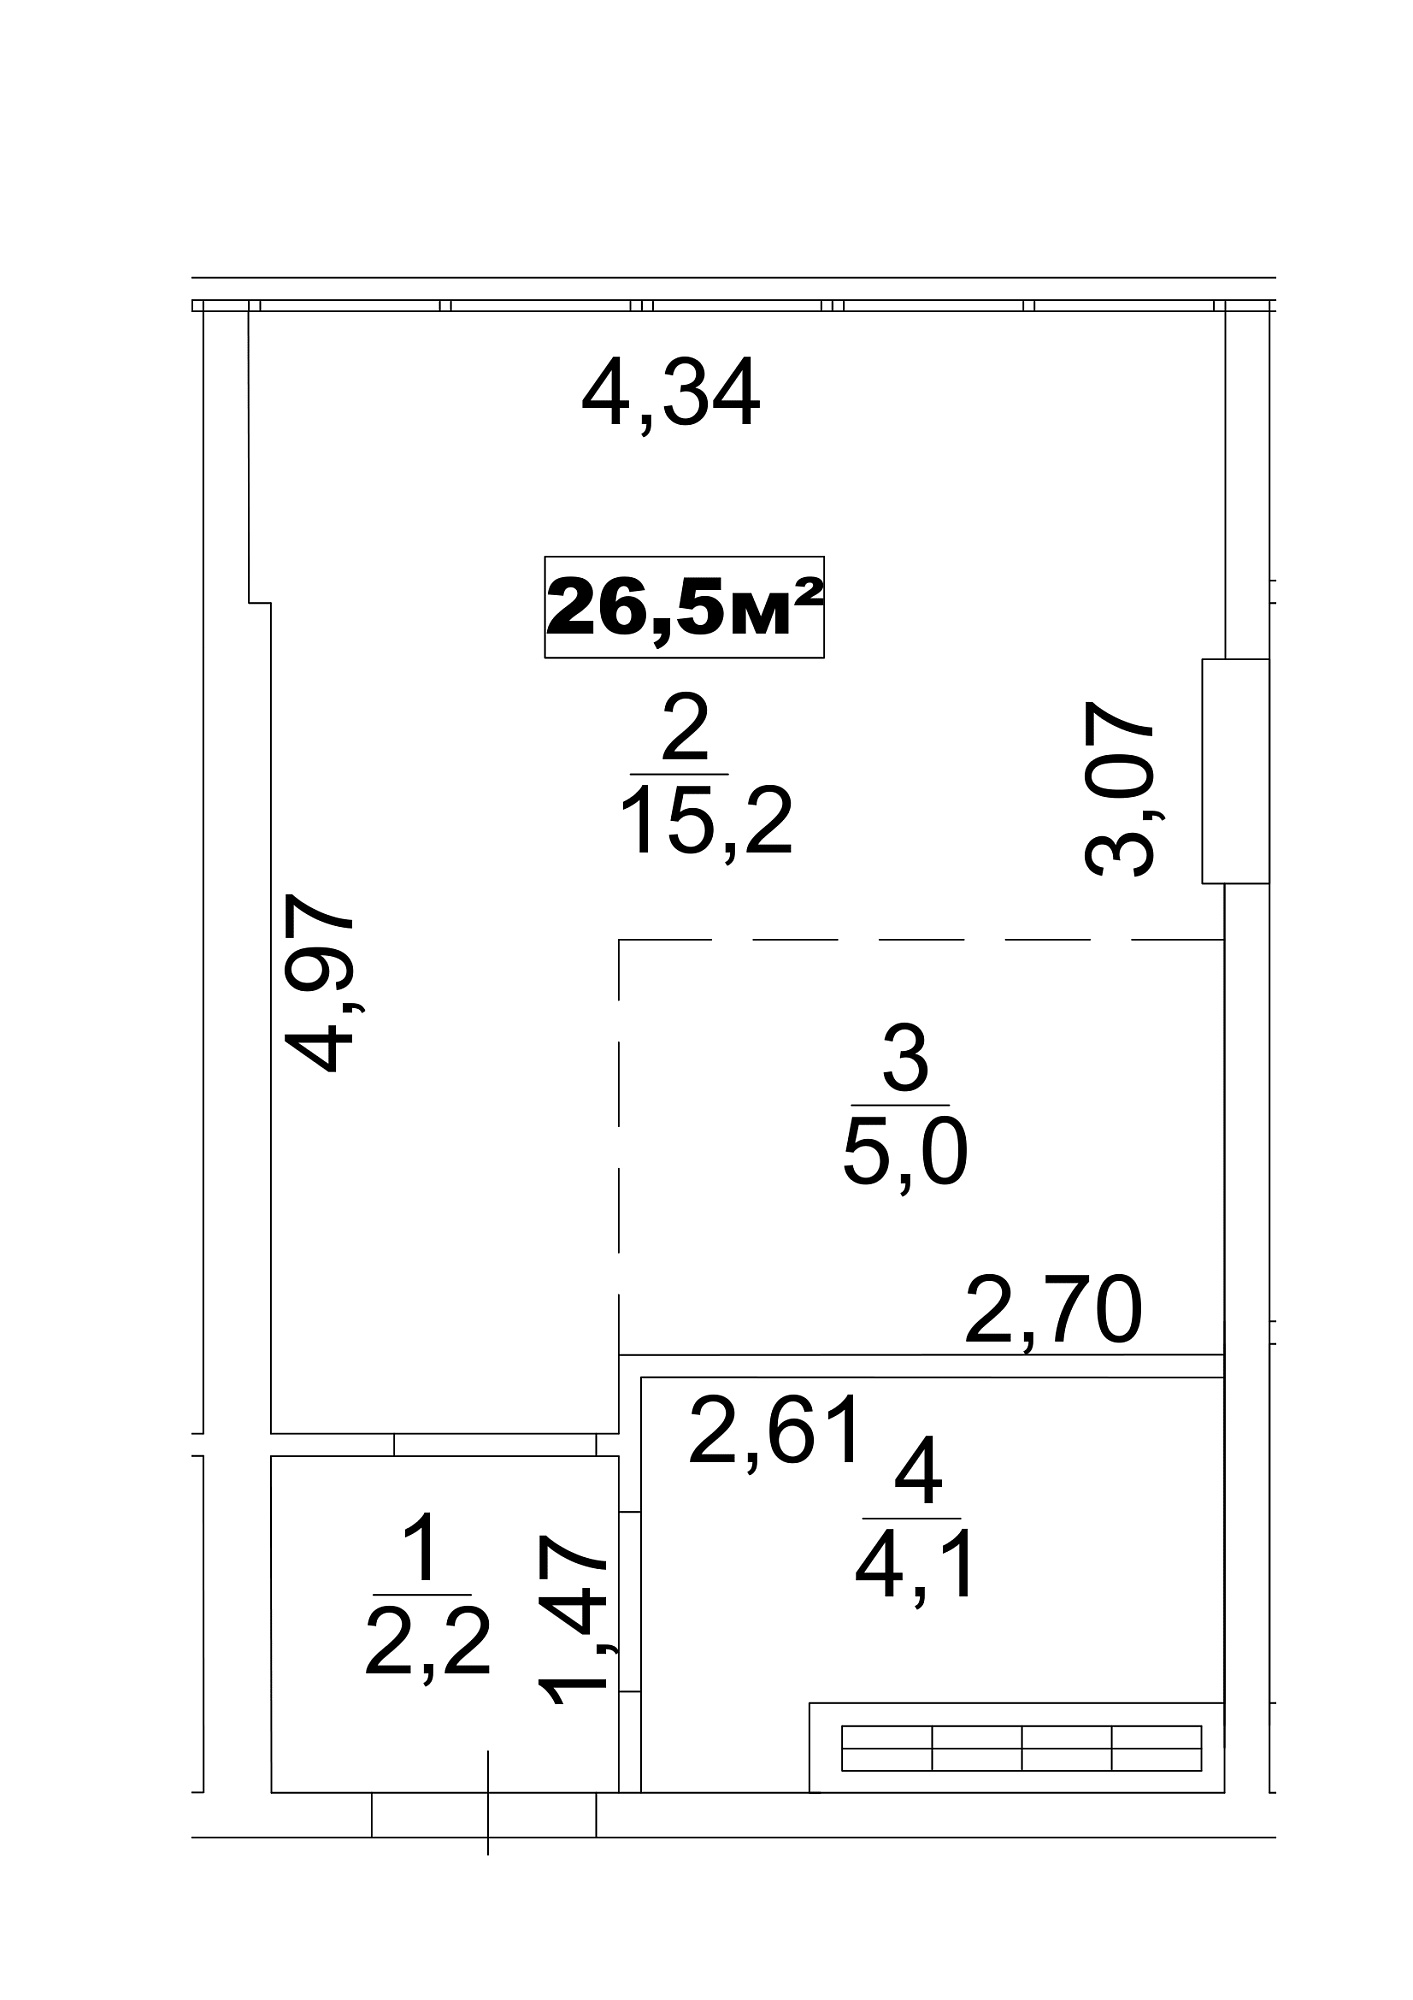 Планировка Smart-квартира площей 26.5м2, AB-13-05/0036в.